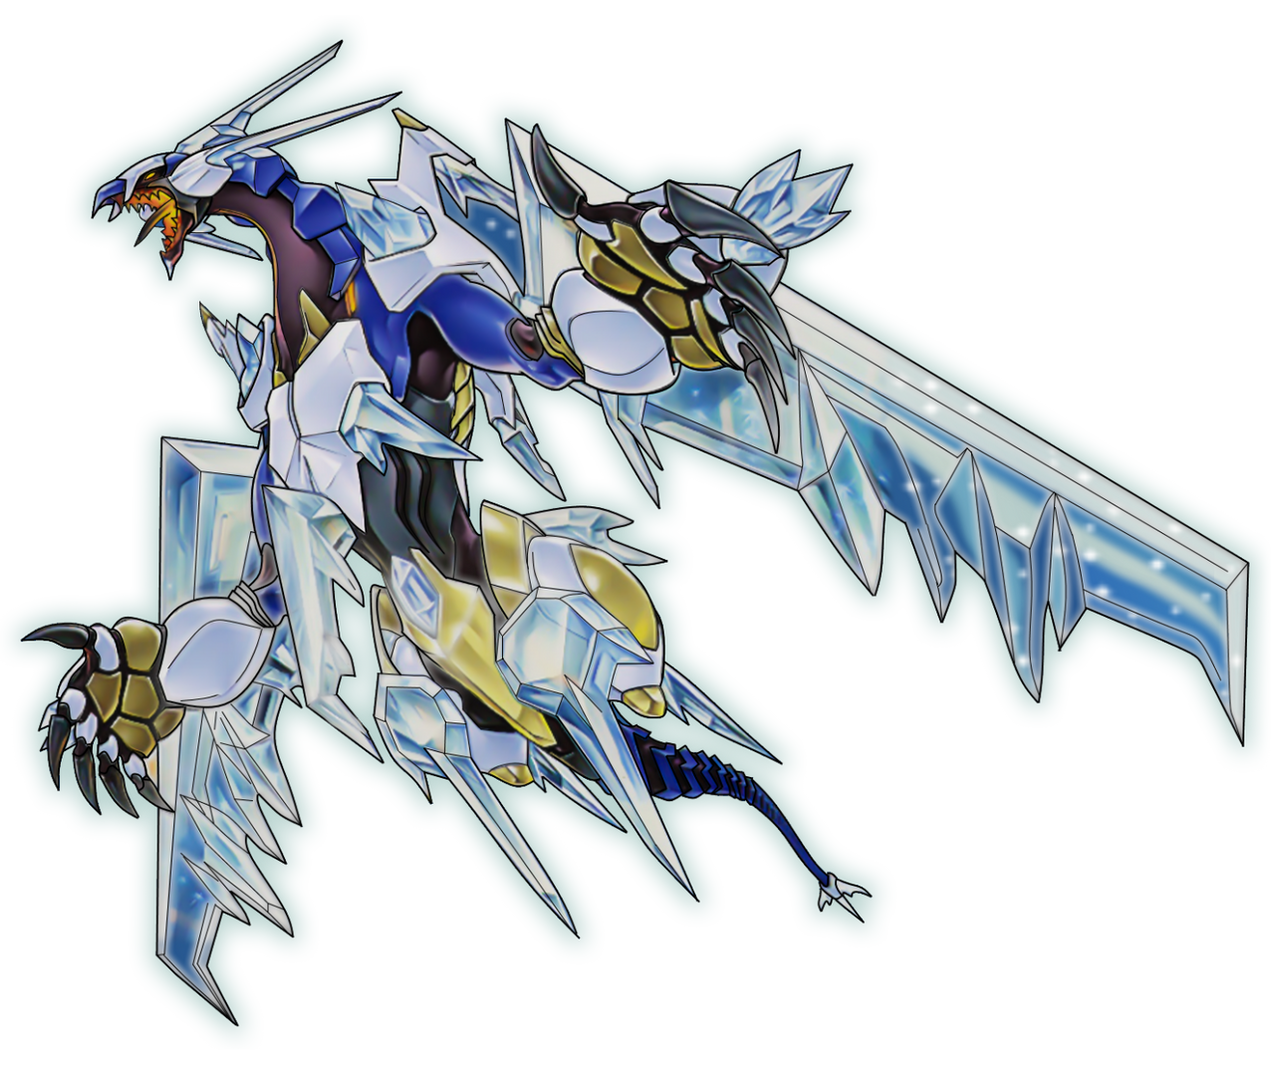 Crystal Wing Synchro Dragon Render Full Art By Darkuyab On Deviantart